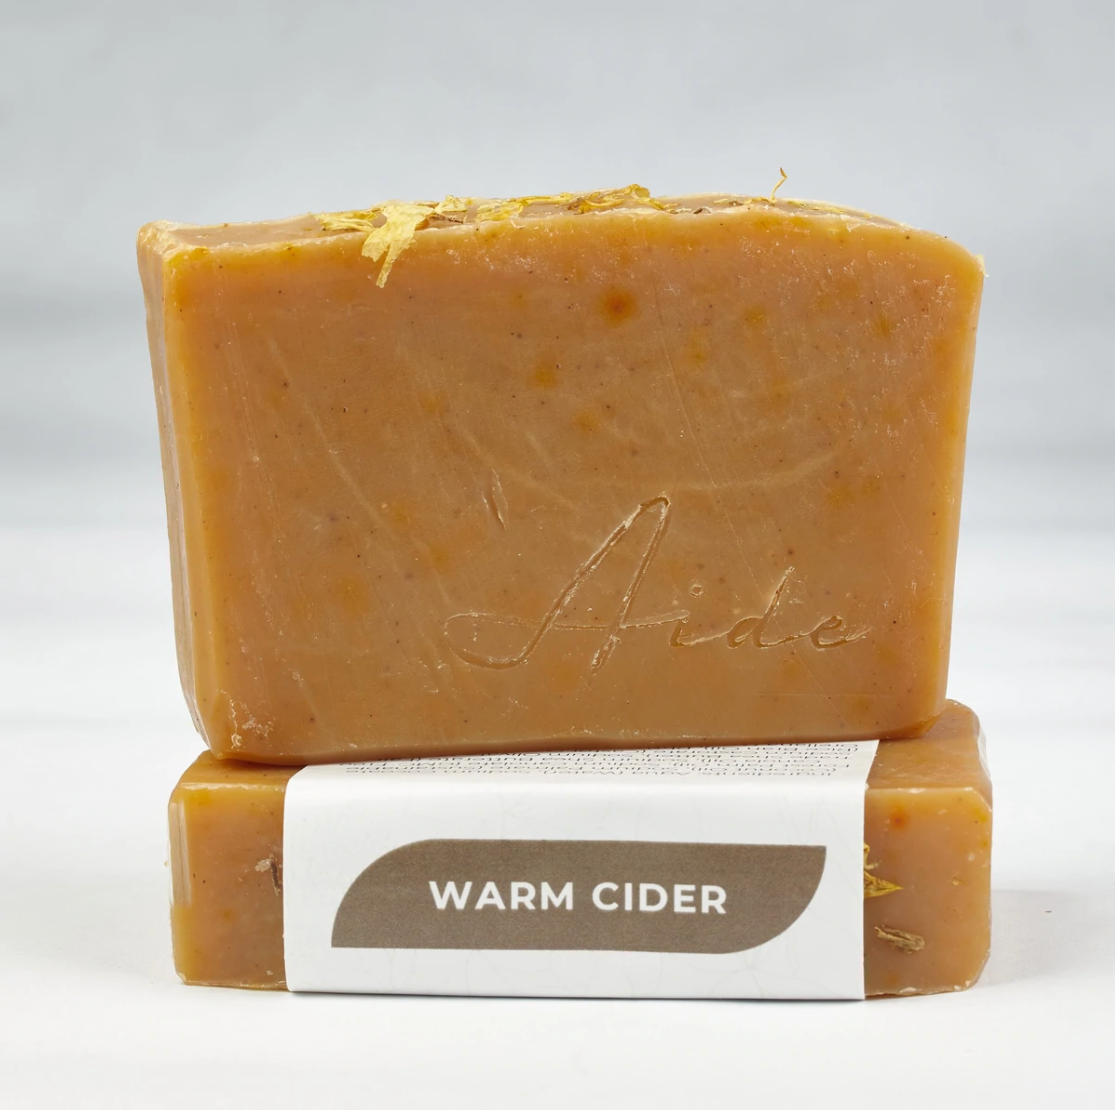 Warm Cider Soap Bar | Aide Bodycare